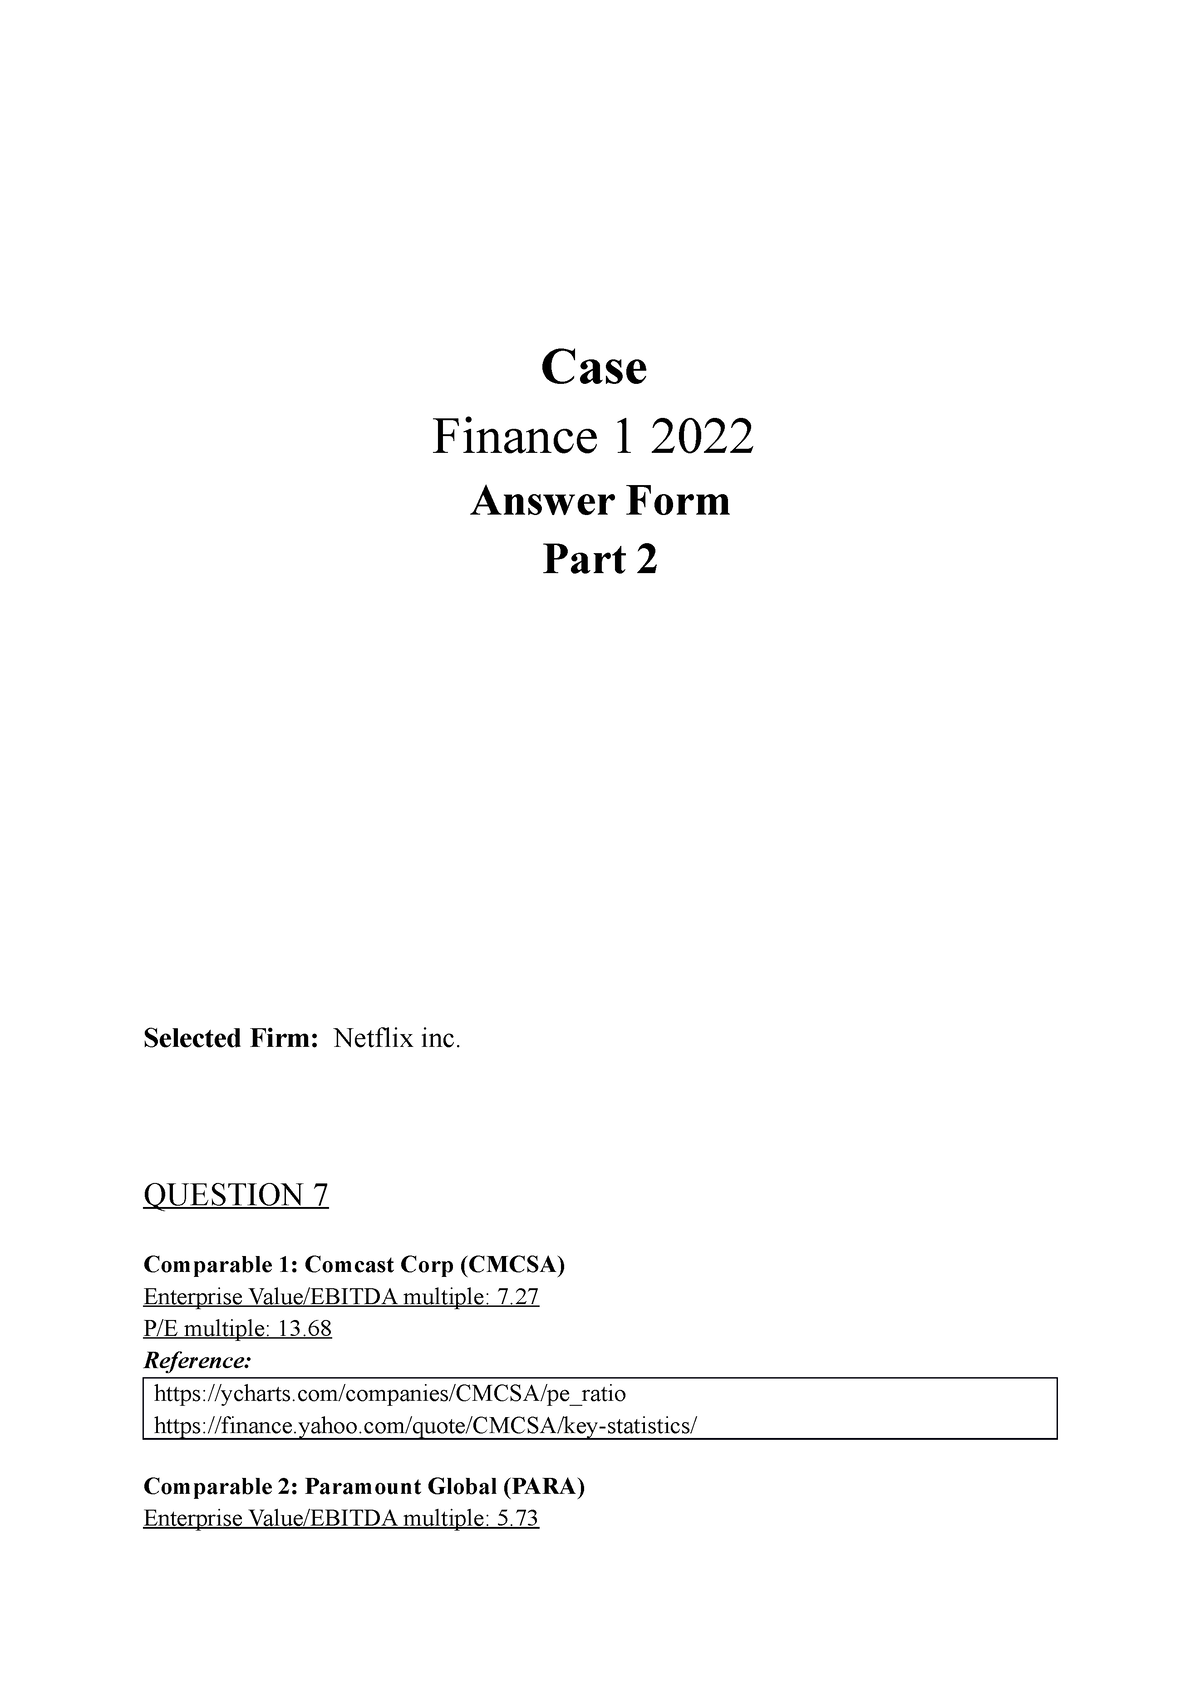 Anwer Form Case Part 2 Case Finance 1 2022 Answer Form Part 2